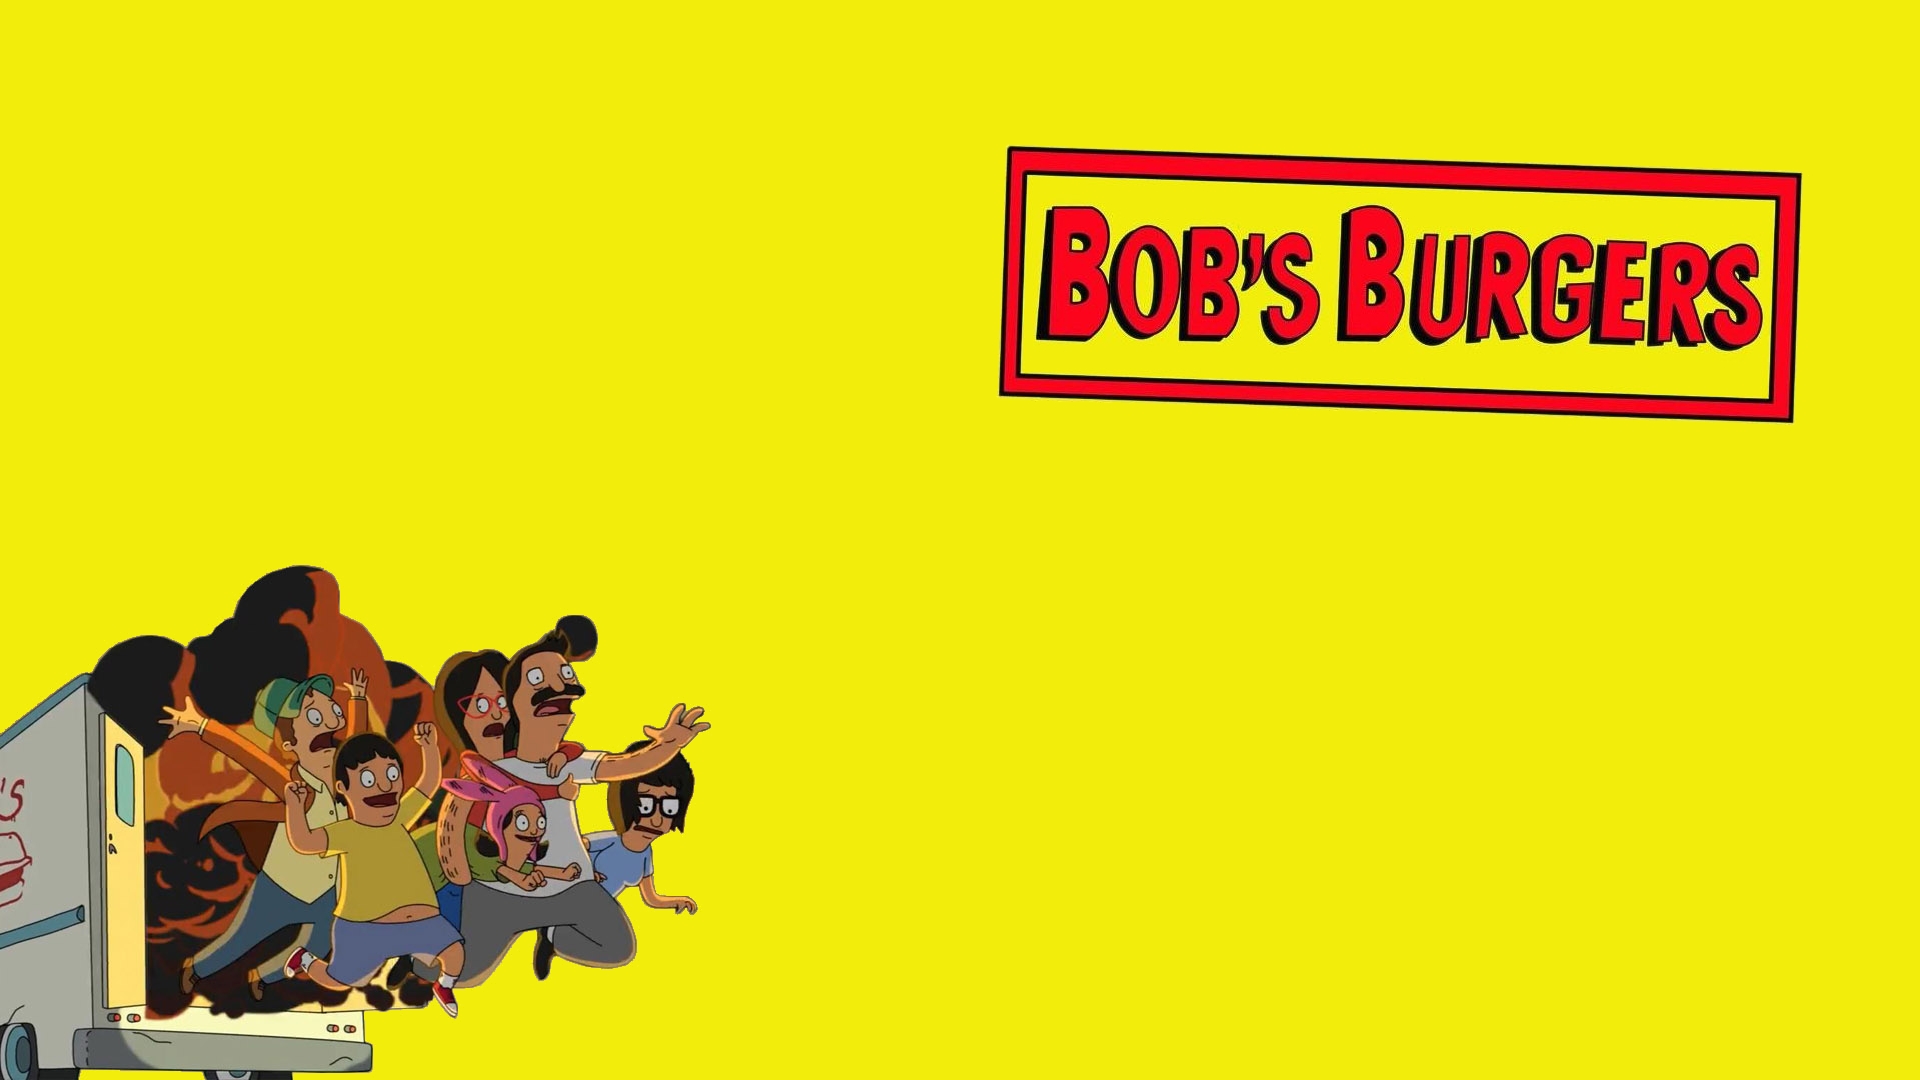 [99+] Bob's Burgers Wallpapers on WallpaperSafari